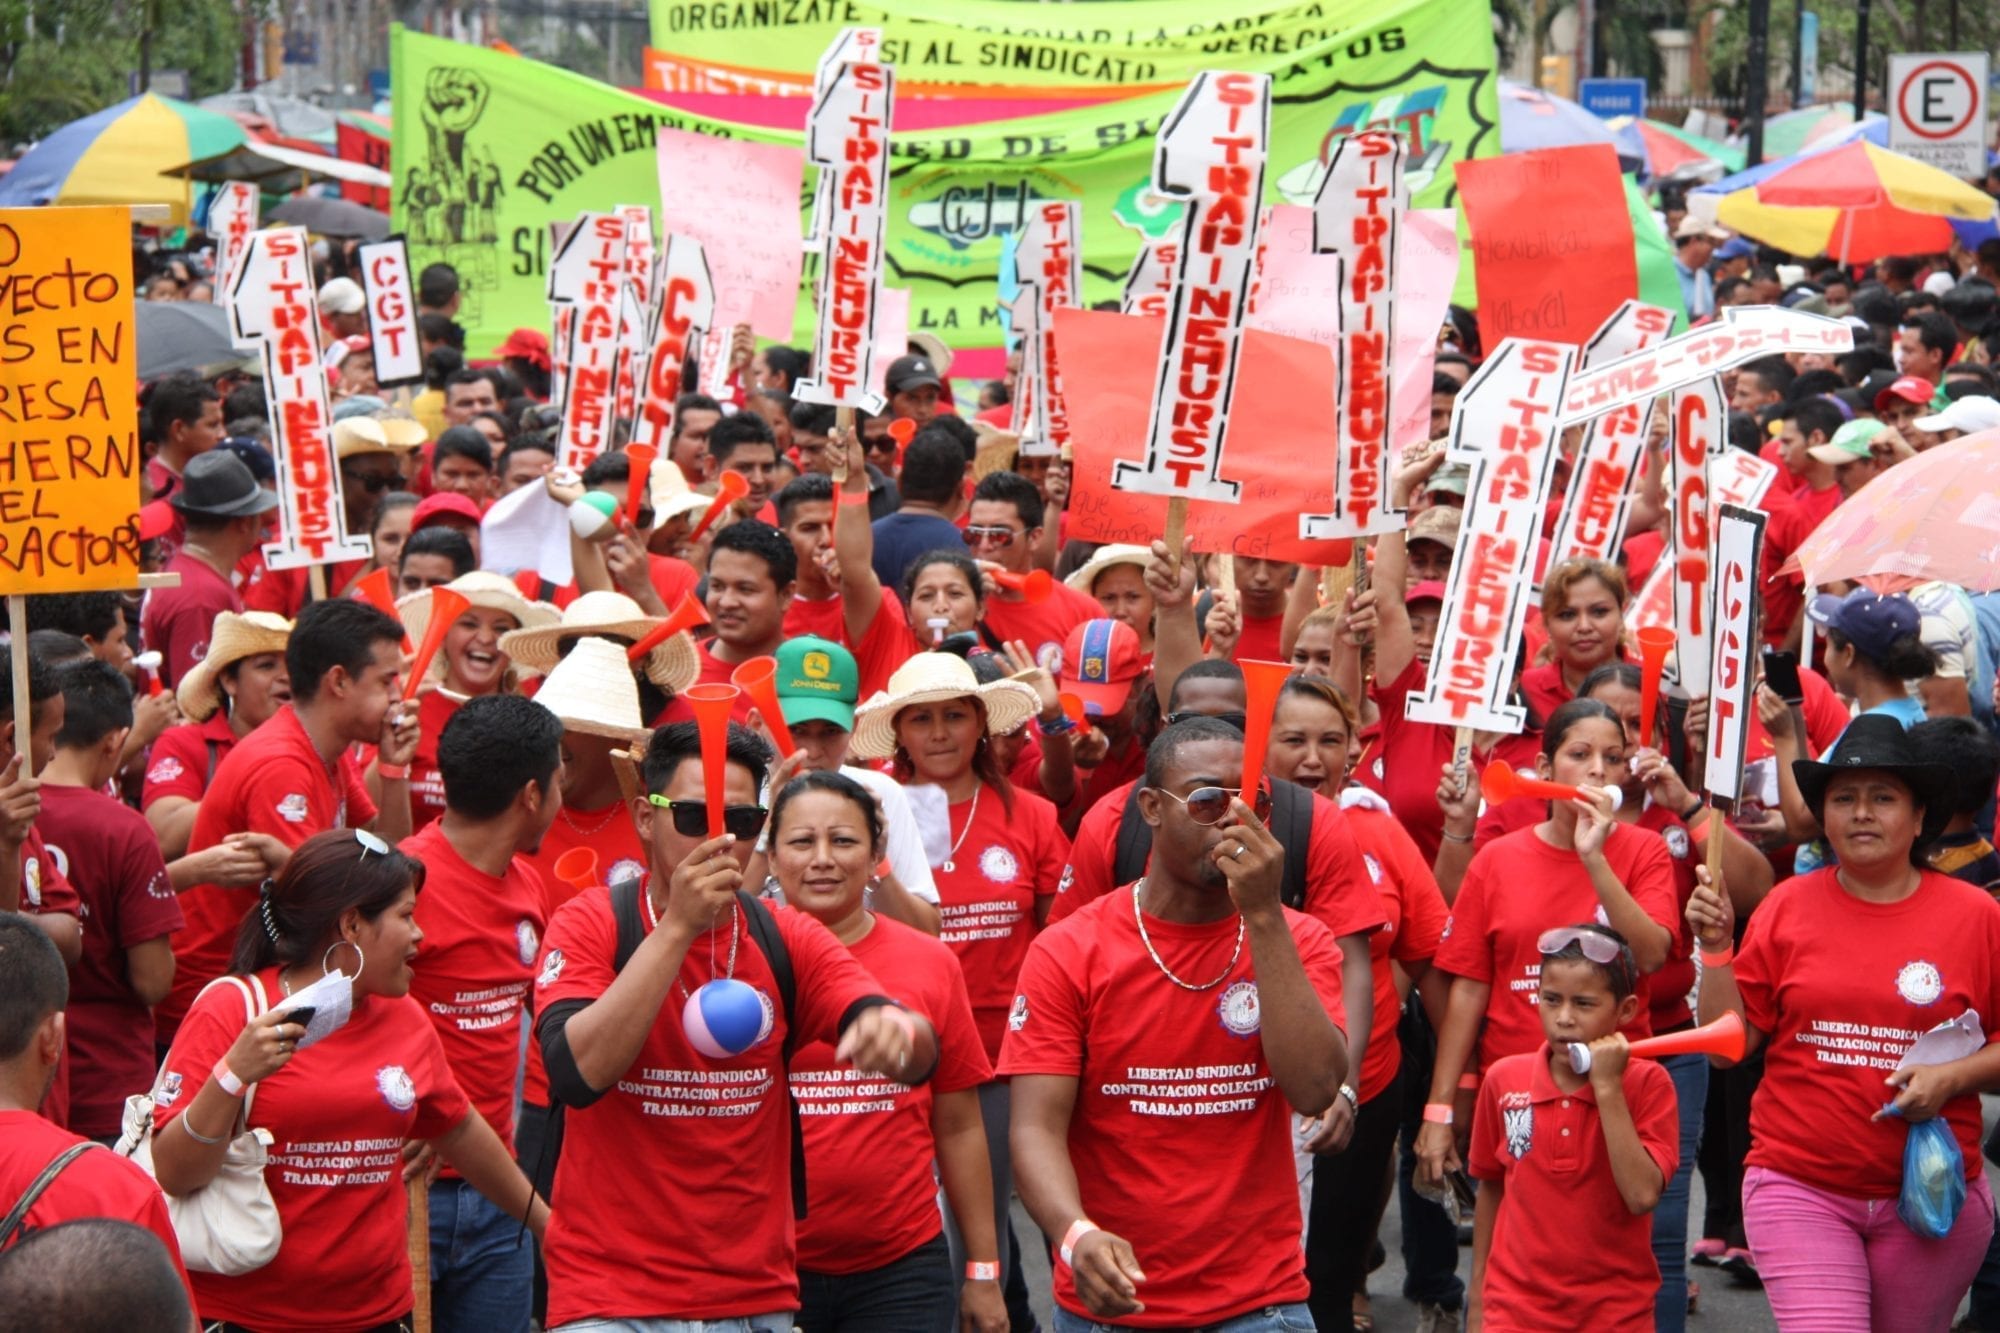 2 More Honduran Union Leaders Threatened, Harassed